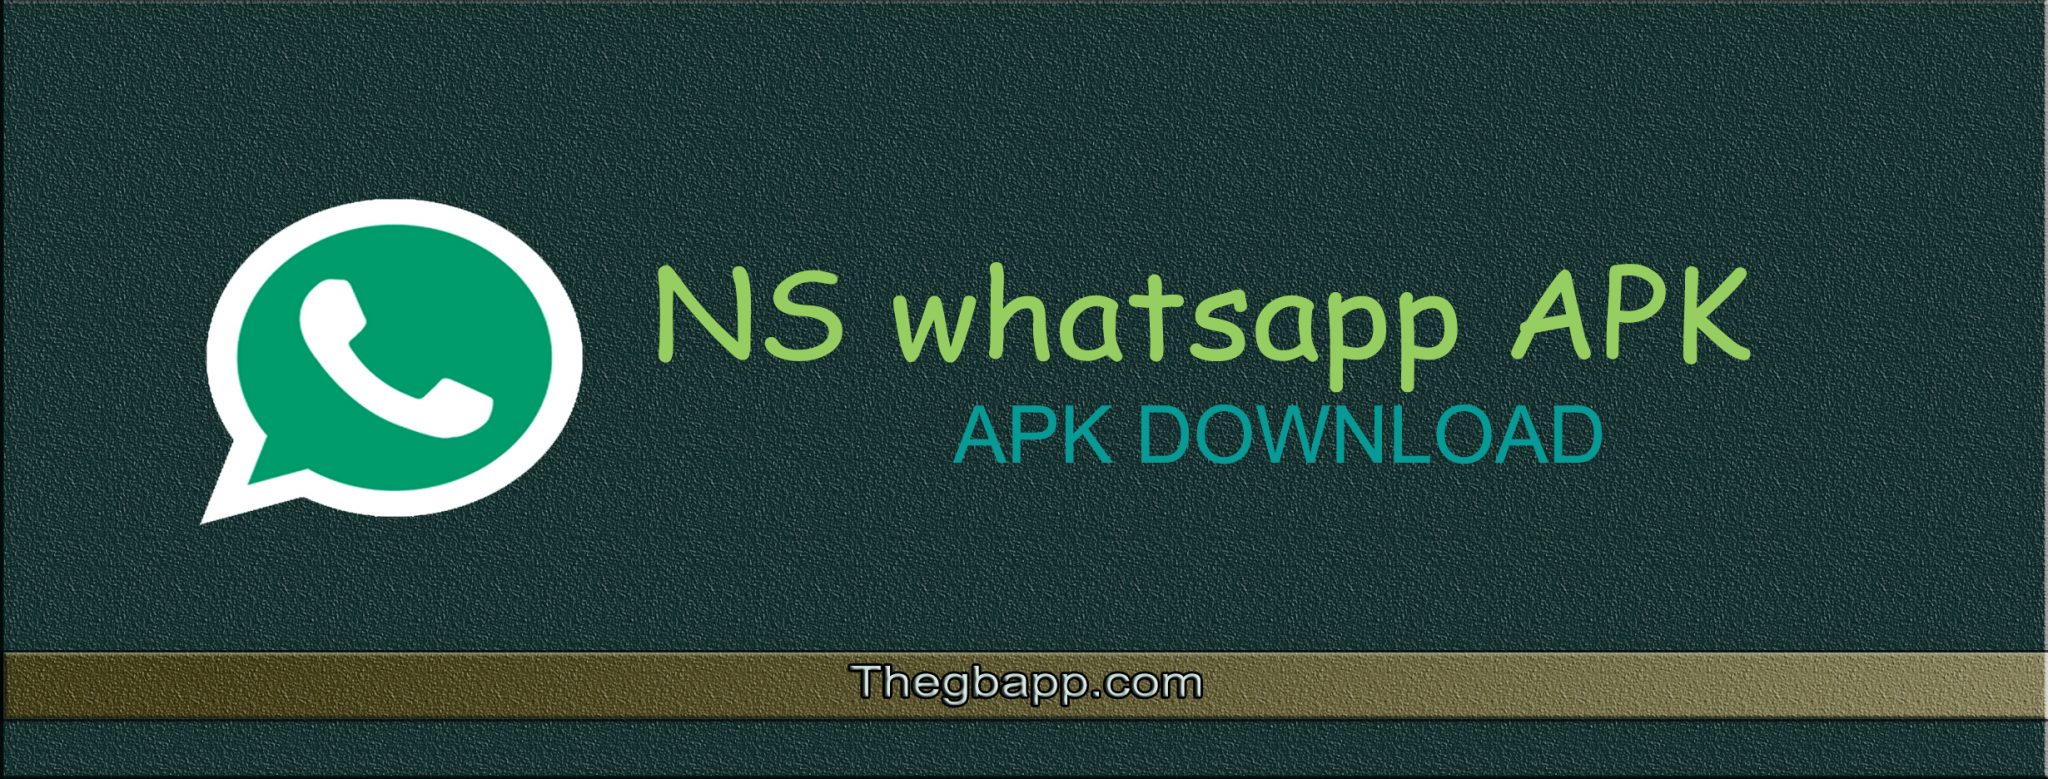 ns whatsapp download apk